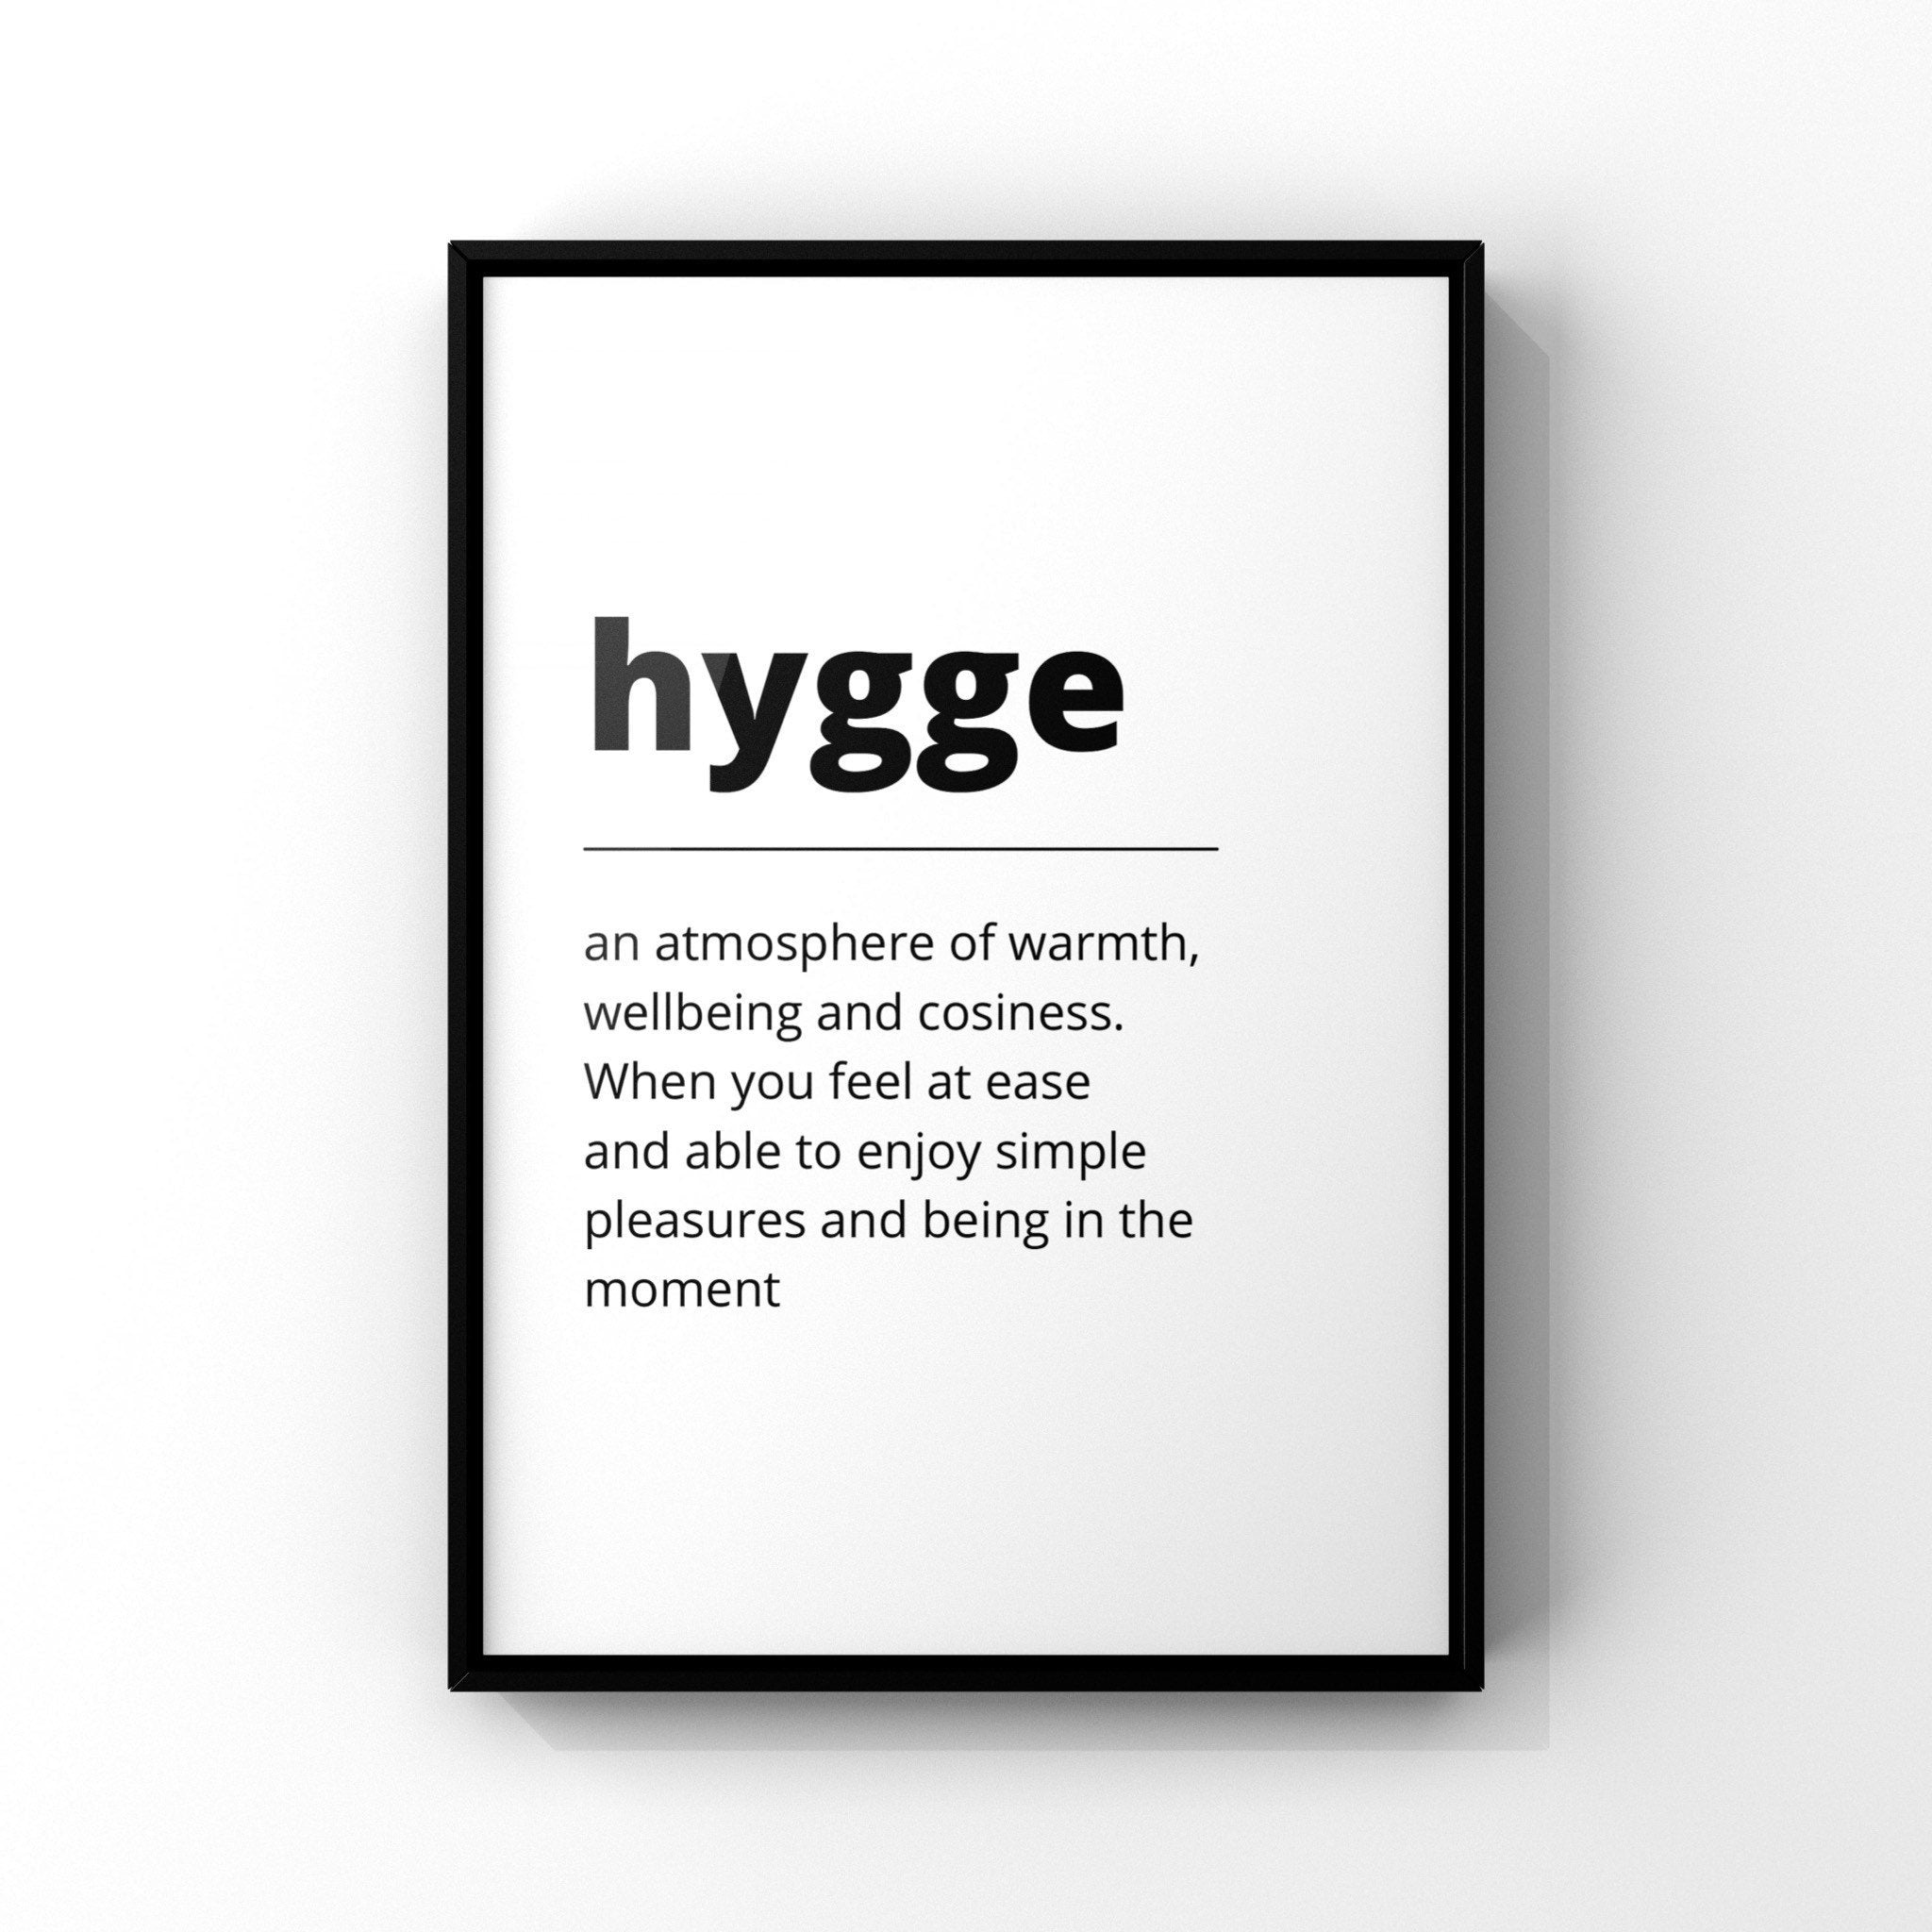 Hygge definition